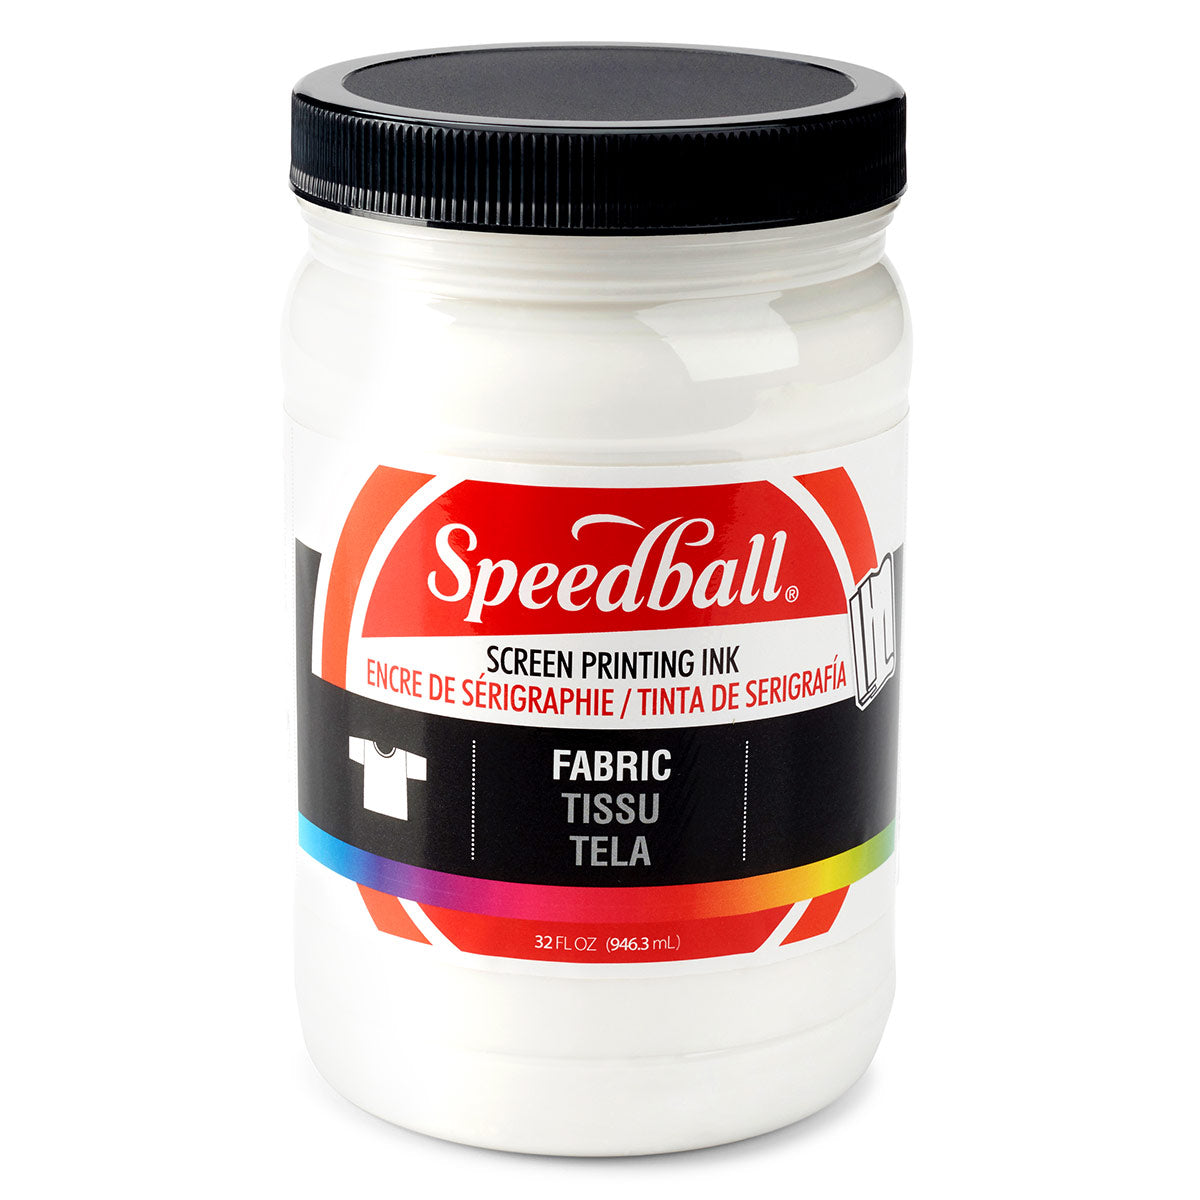 Speedball - Fabric Screen Printing Ink 946ml (32oz) - White